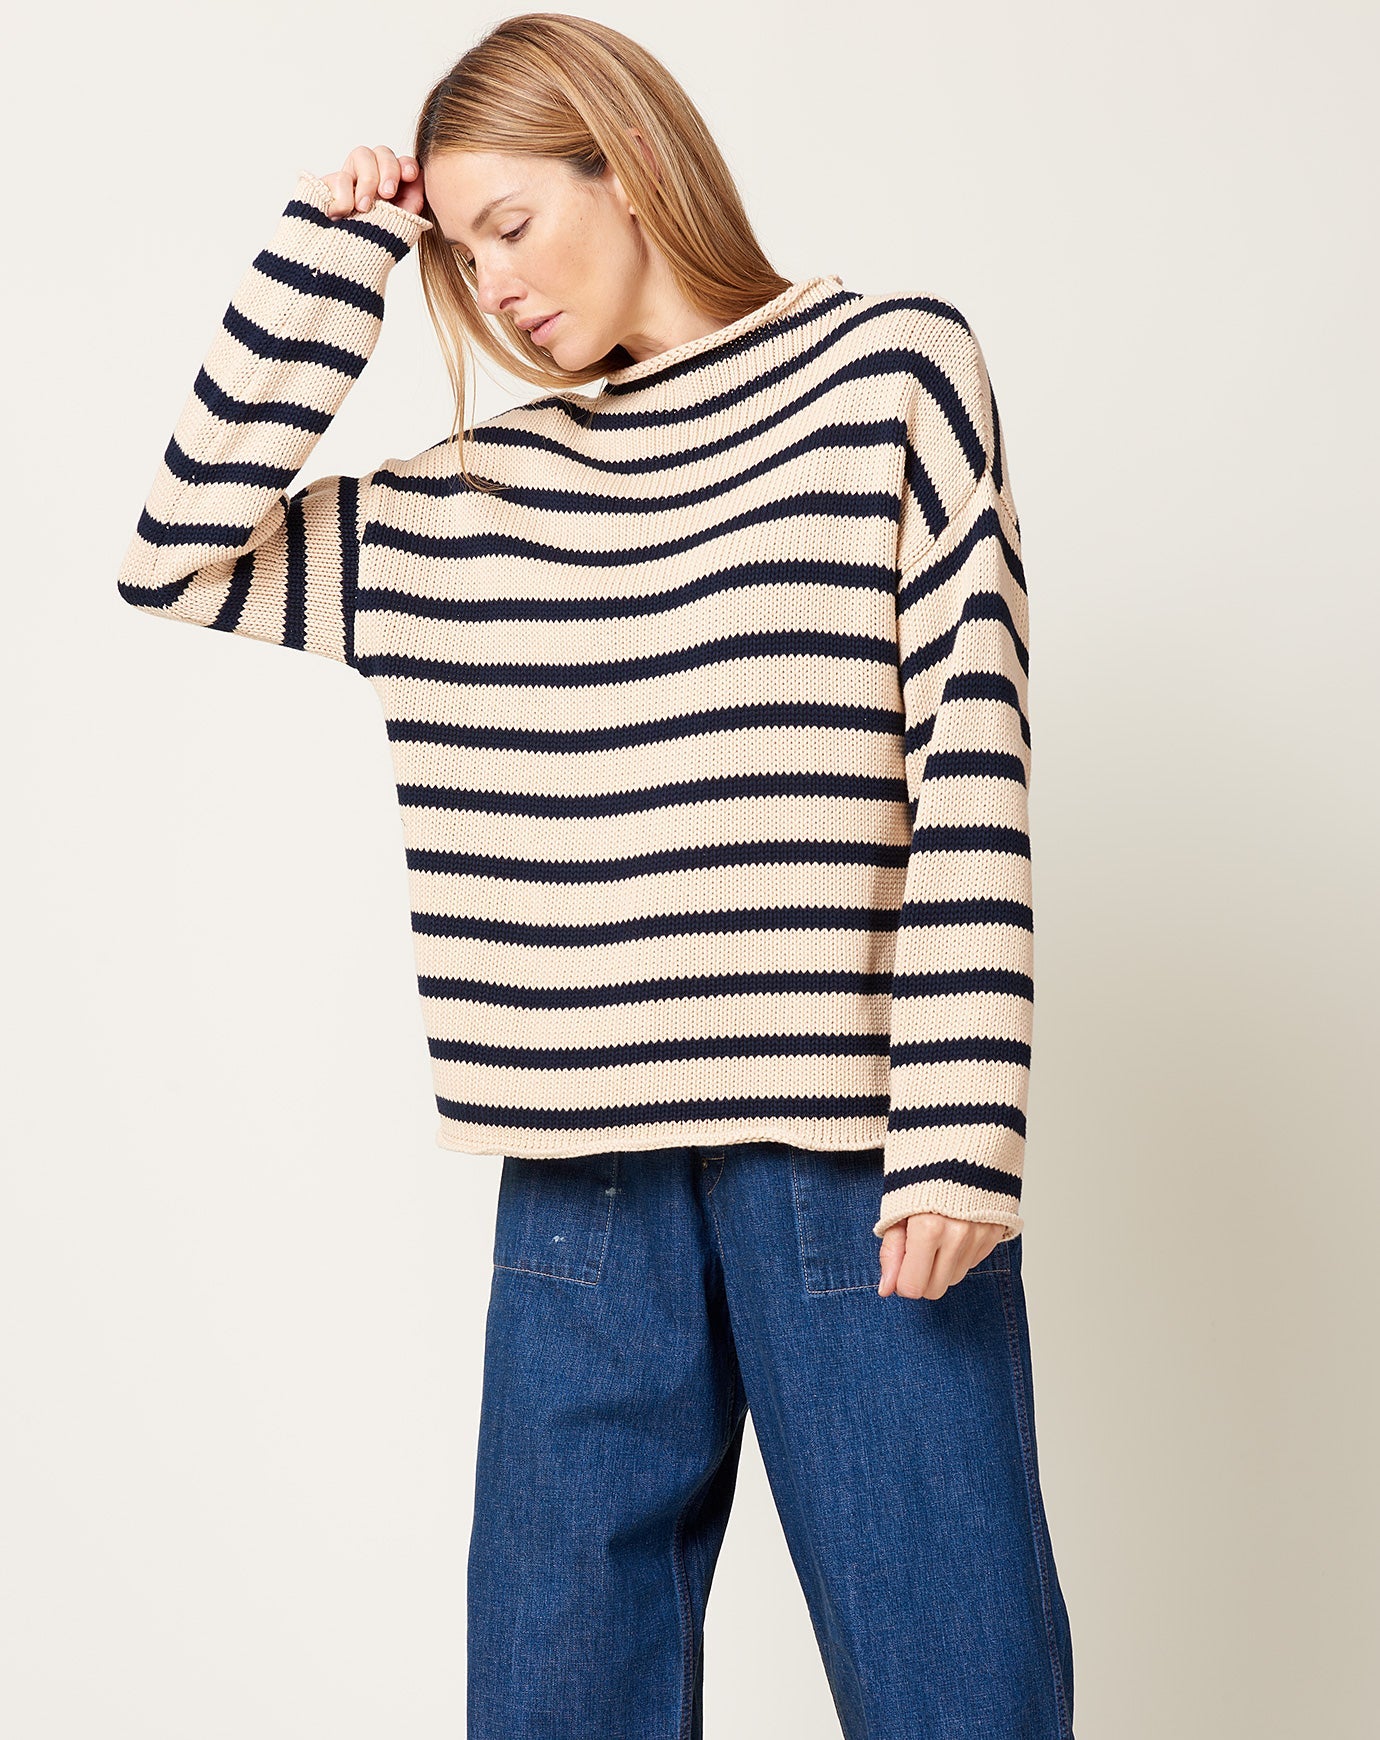 Demylee Lamis Sweater in Natural & Navy Stripe